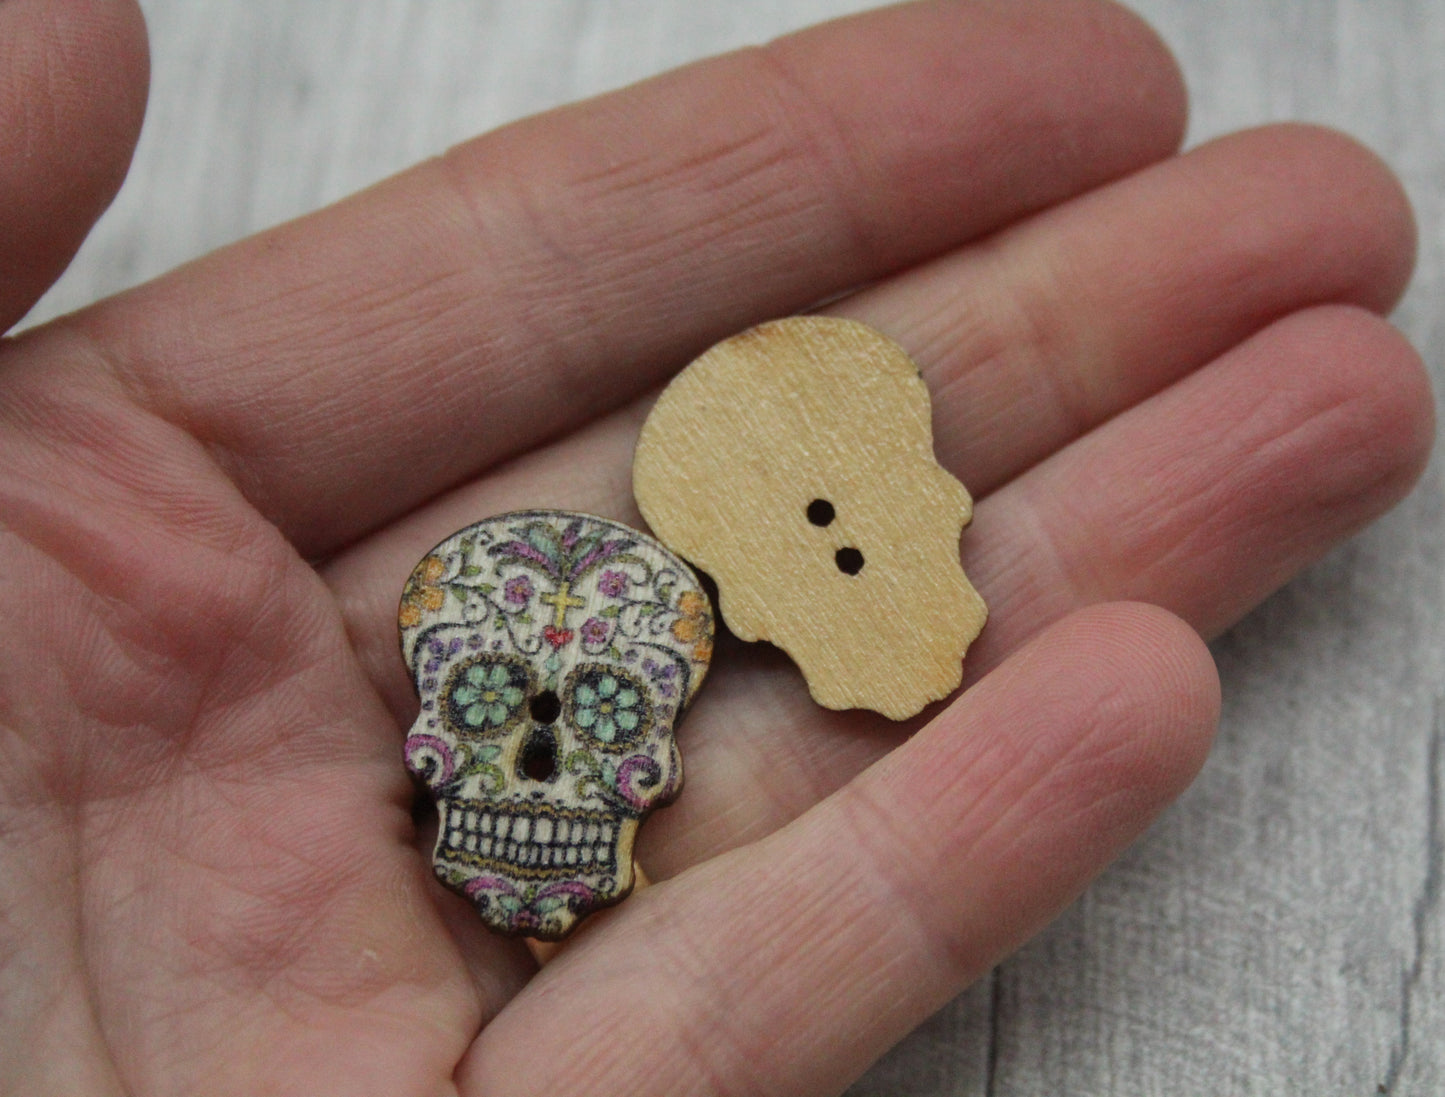 2 x Wooden skull buttons